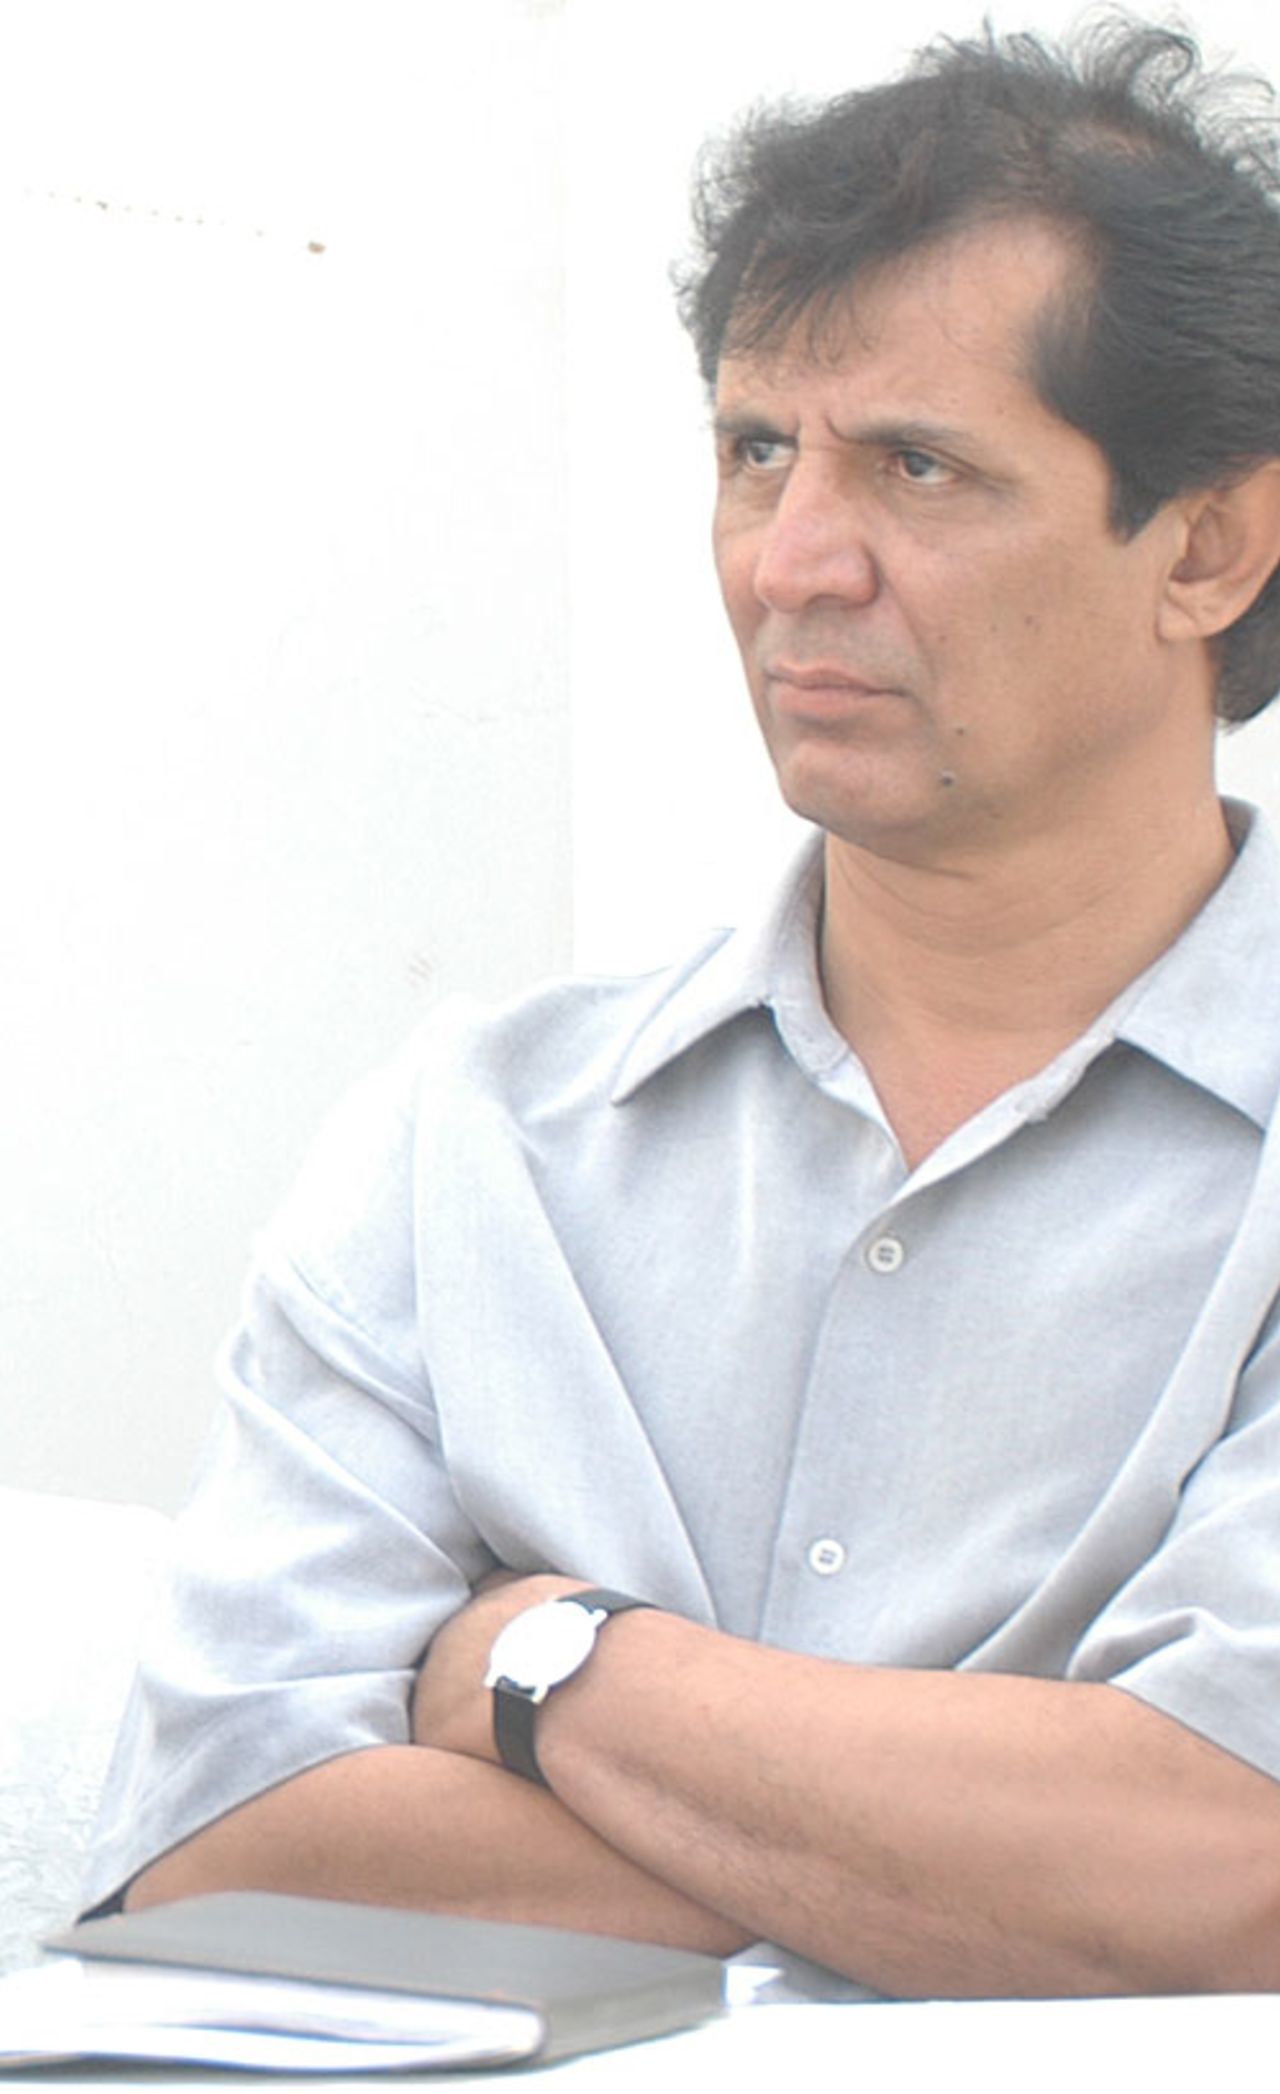 Saleem Jaffar, Karachi, February 18, 2009 